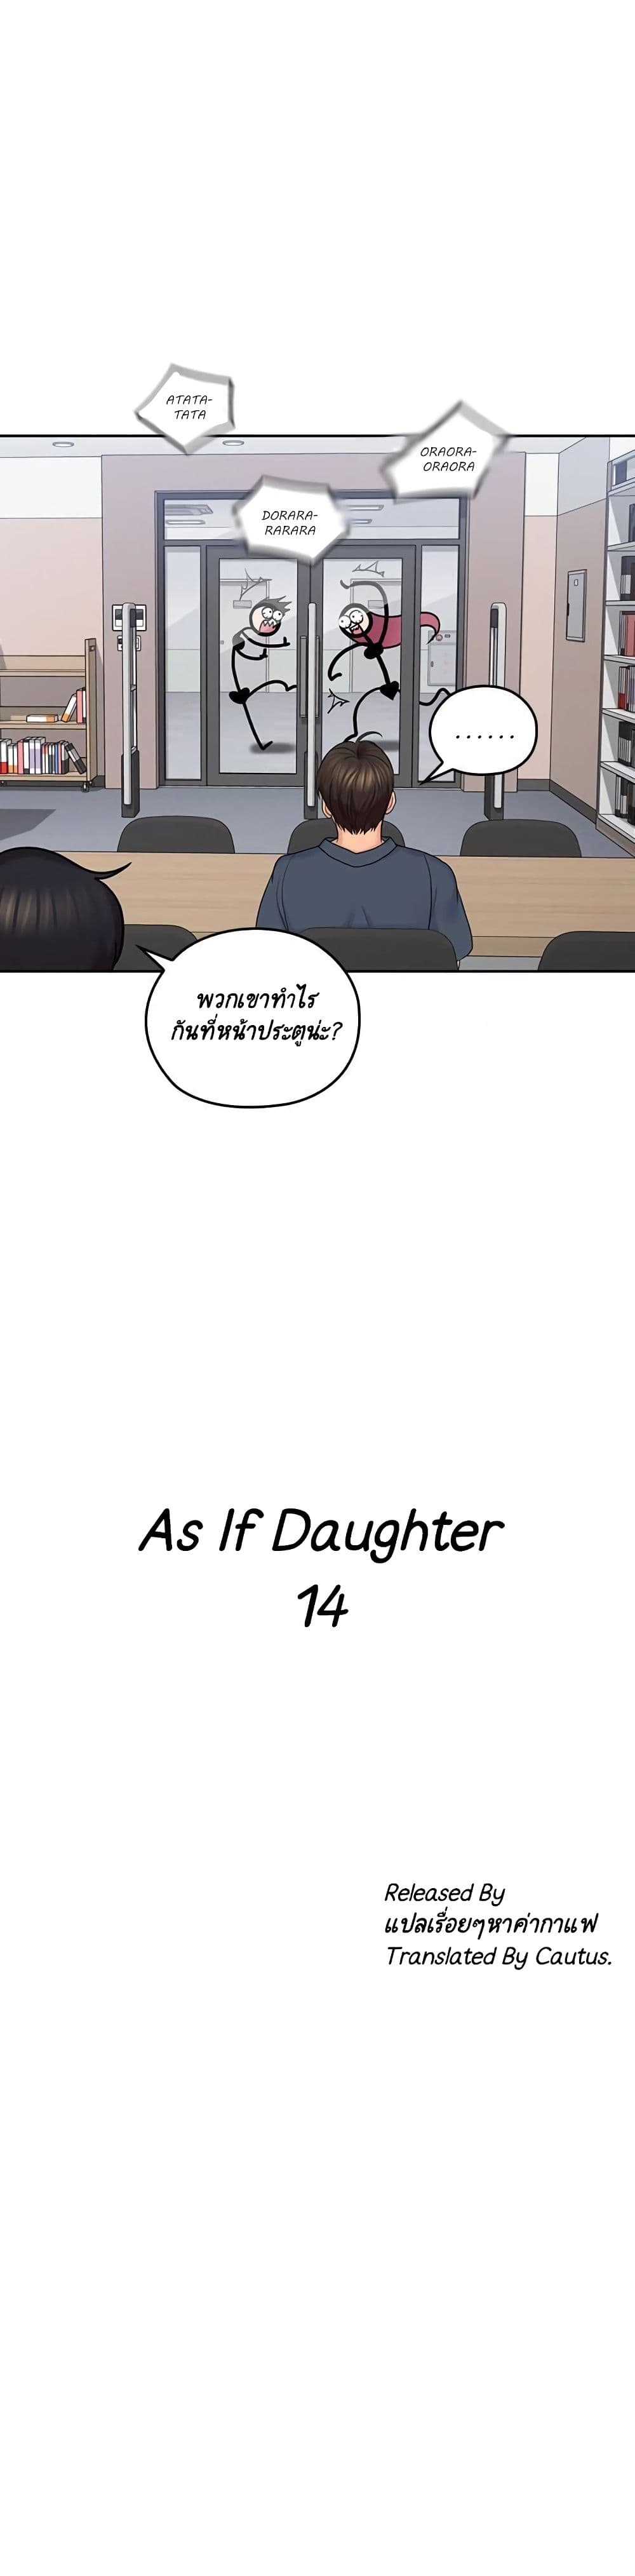 As If Daughter 14-14